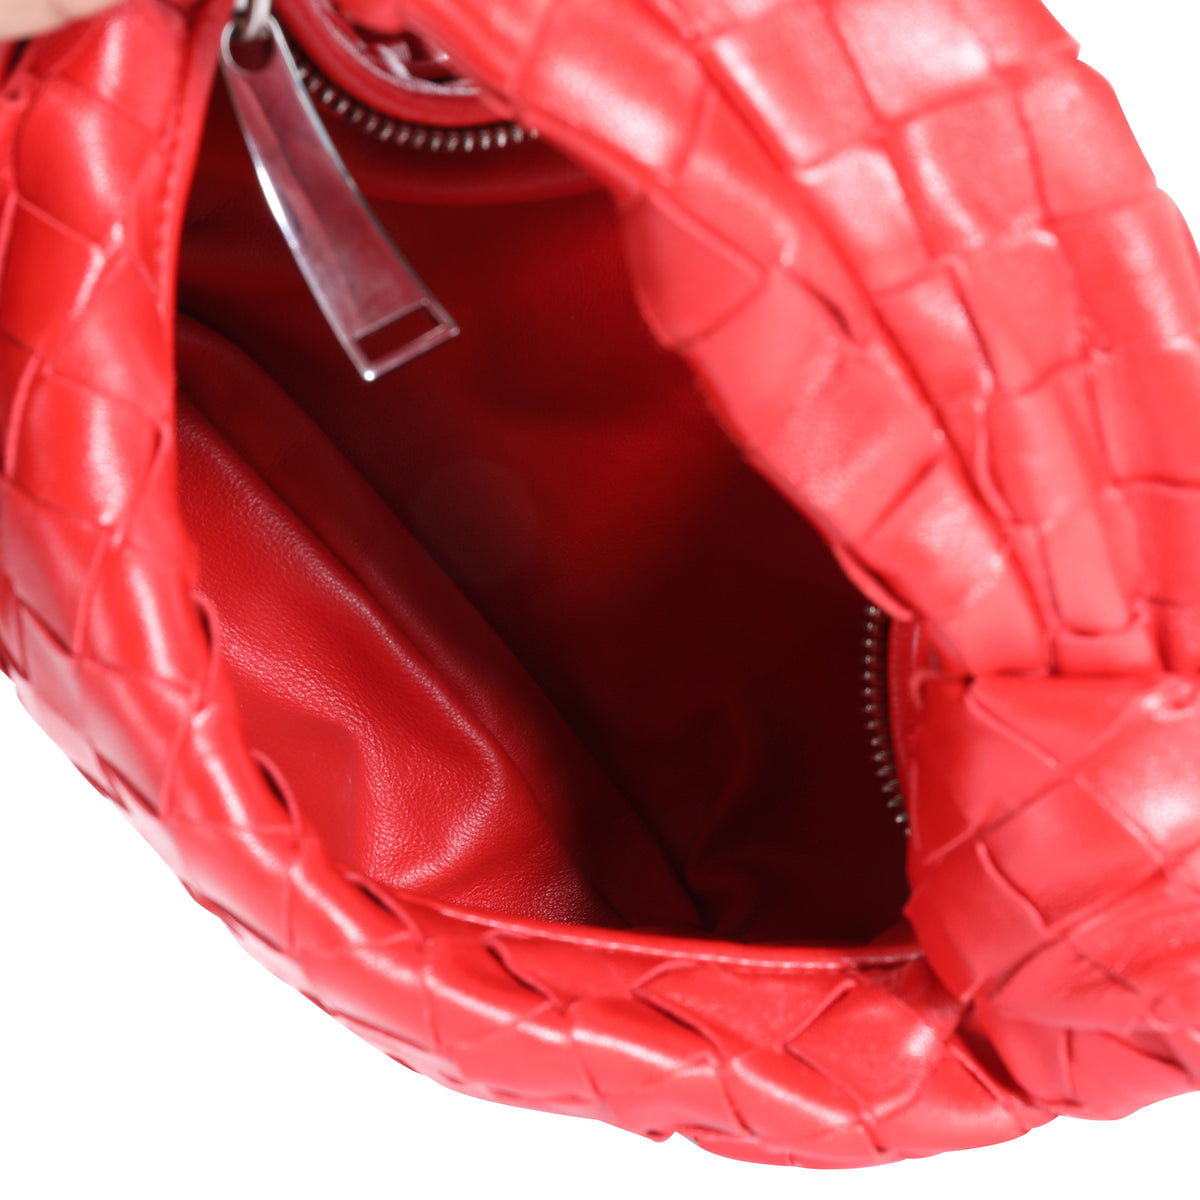 Bottega Veneta Red Intrecciato Leather Mini Jodie Bag